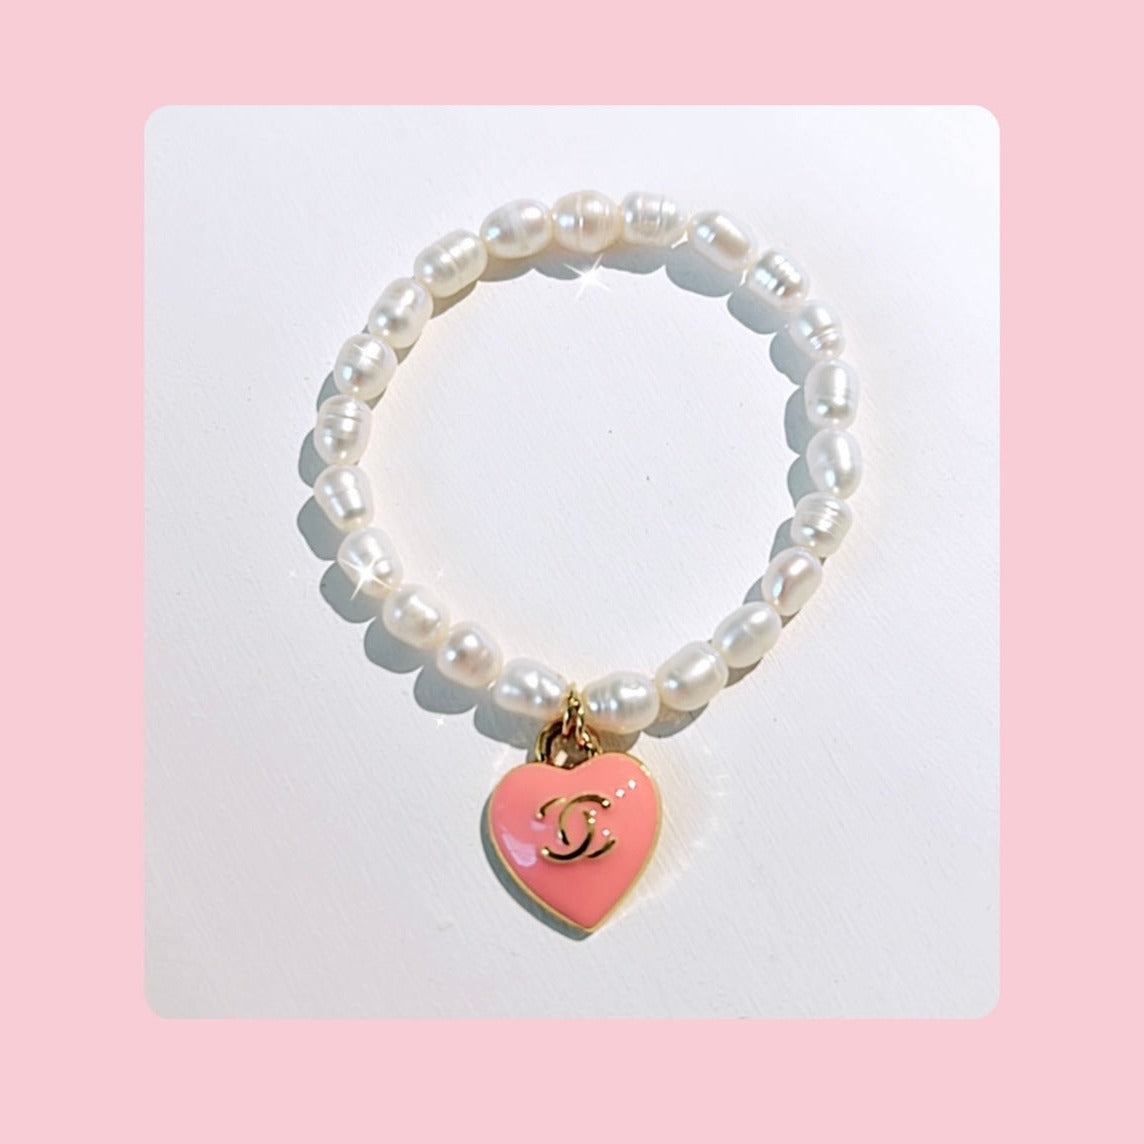 The Pearl & Pink Heart Bracelet